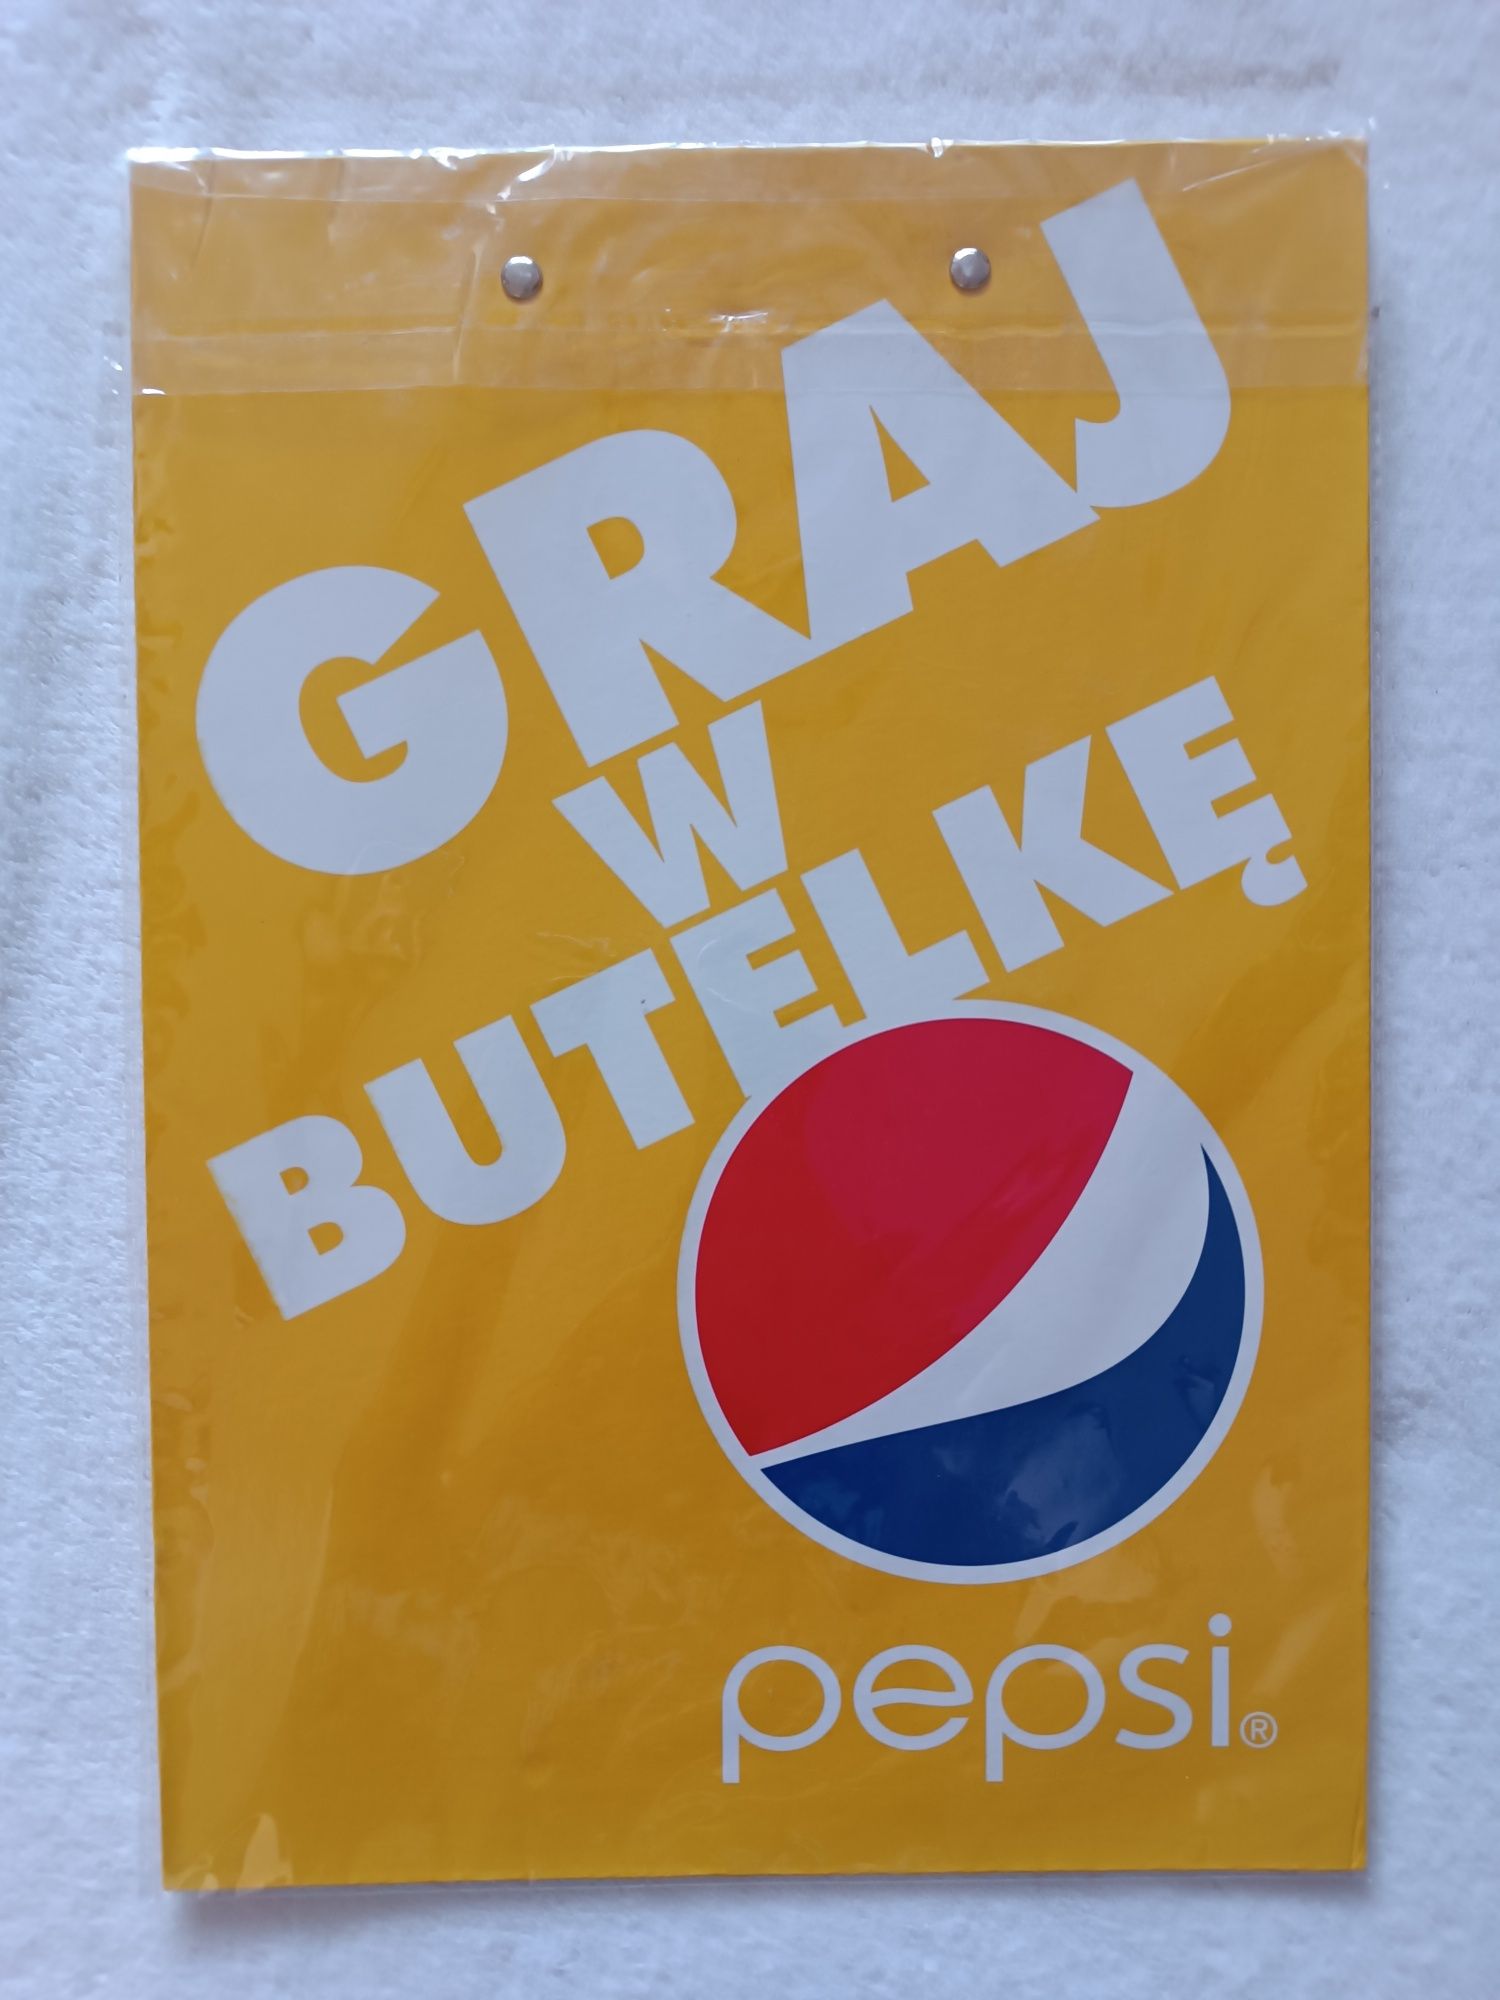 Podkładka z klipsem Pepsi